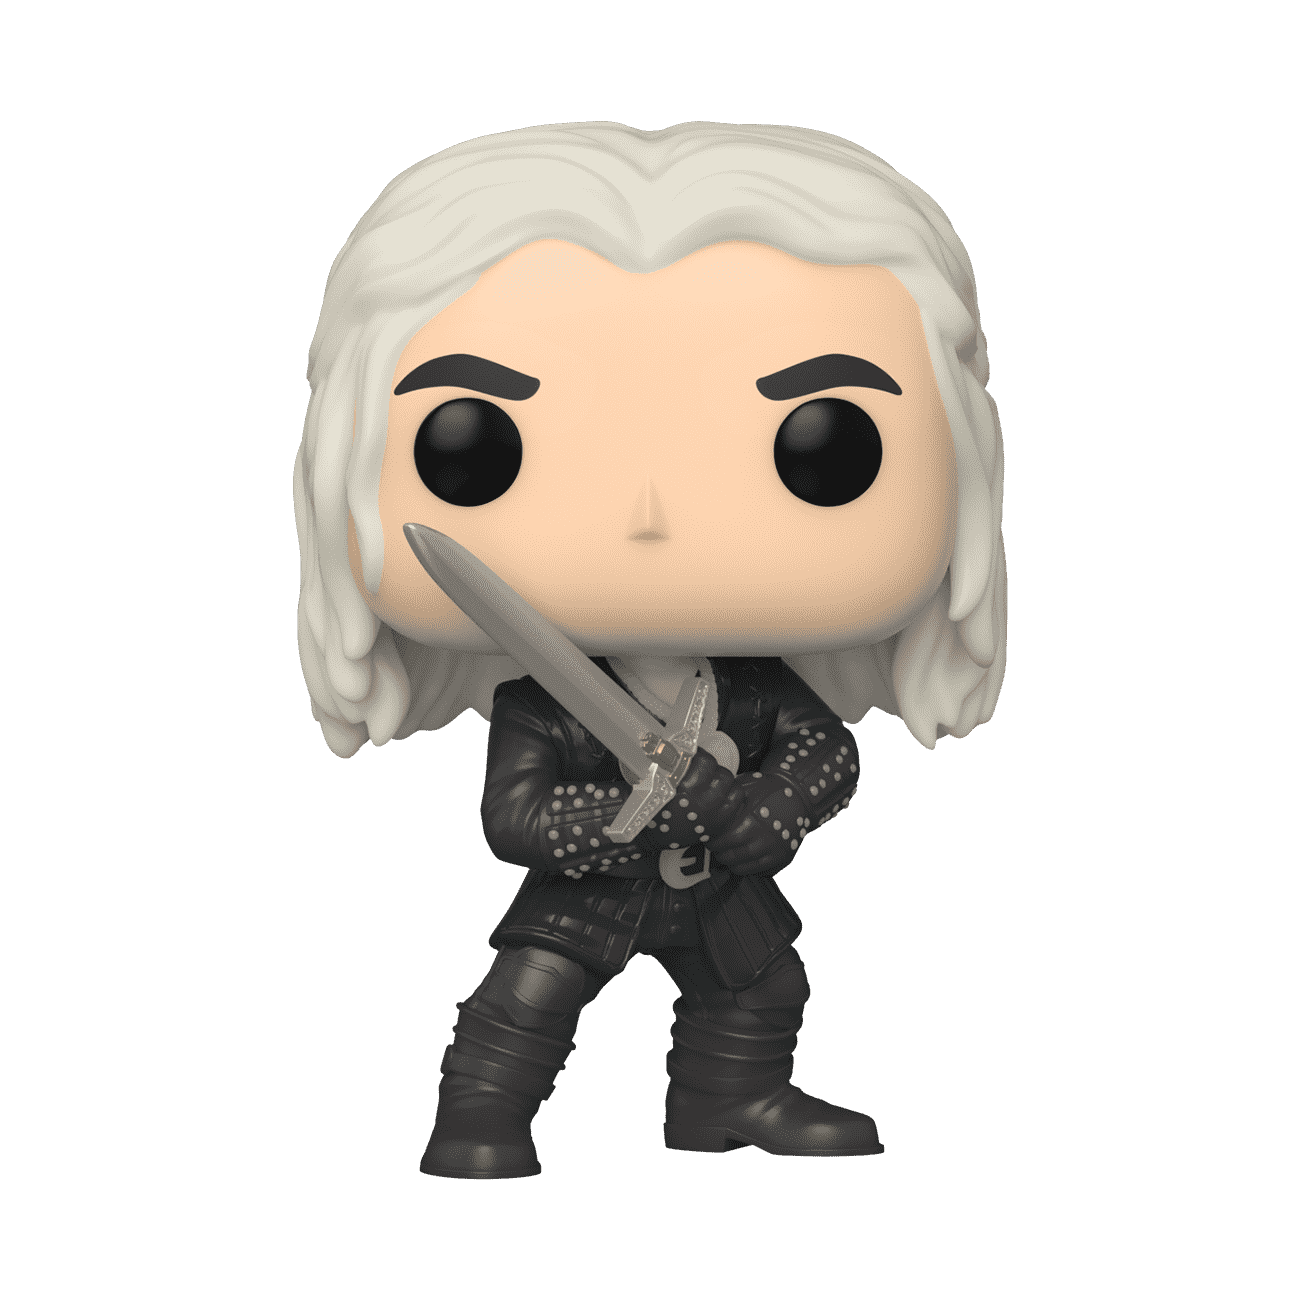 Buy Pop! Geralt at Funko.